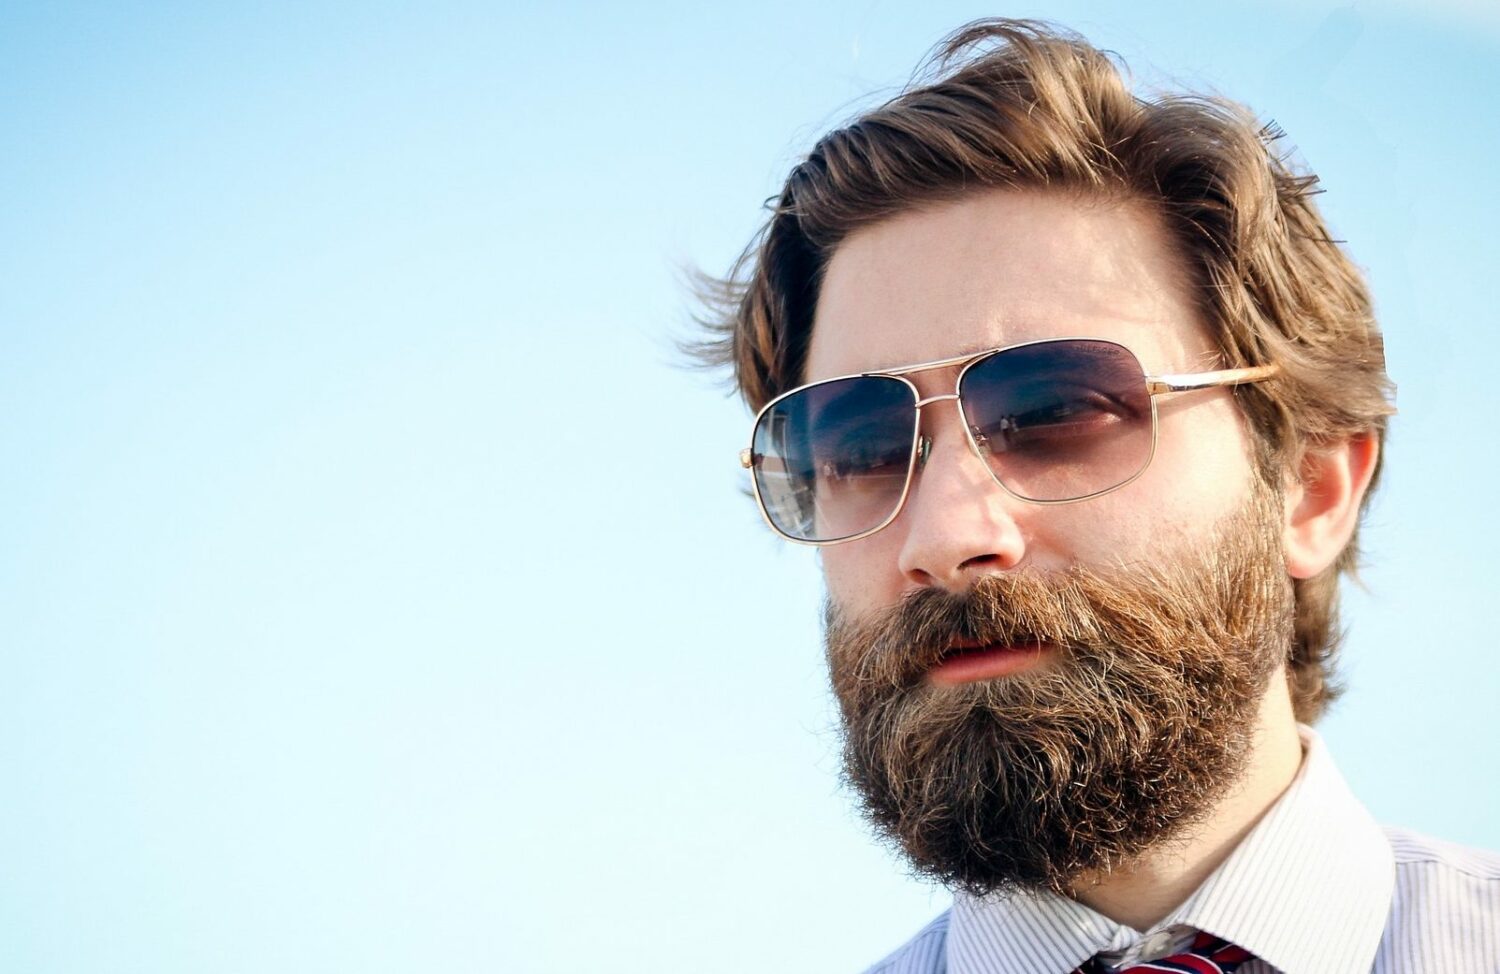 beard man with sunglasses